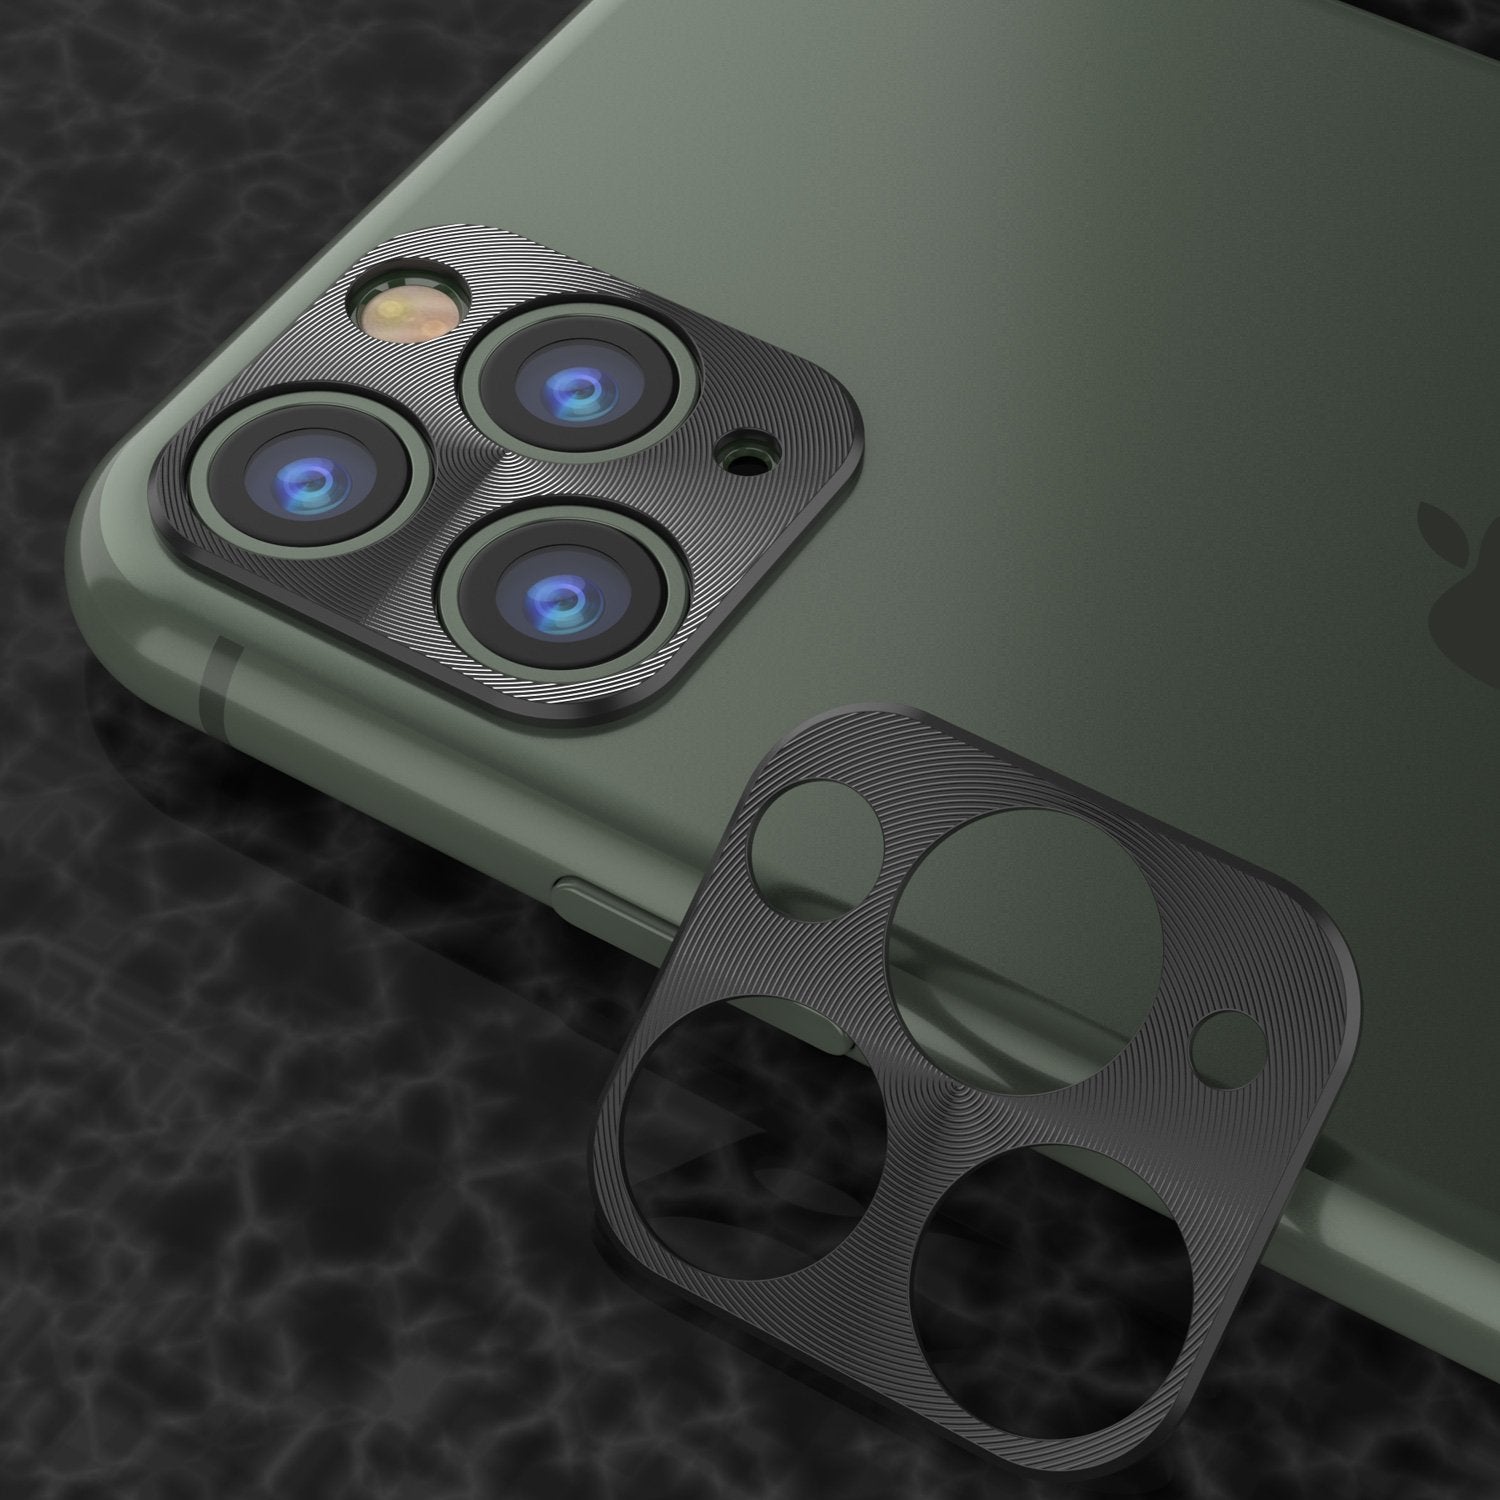 Punkcase iPhone 11 Pro Max Camera Protector Ring [Black]